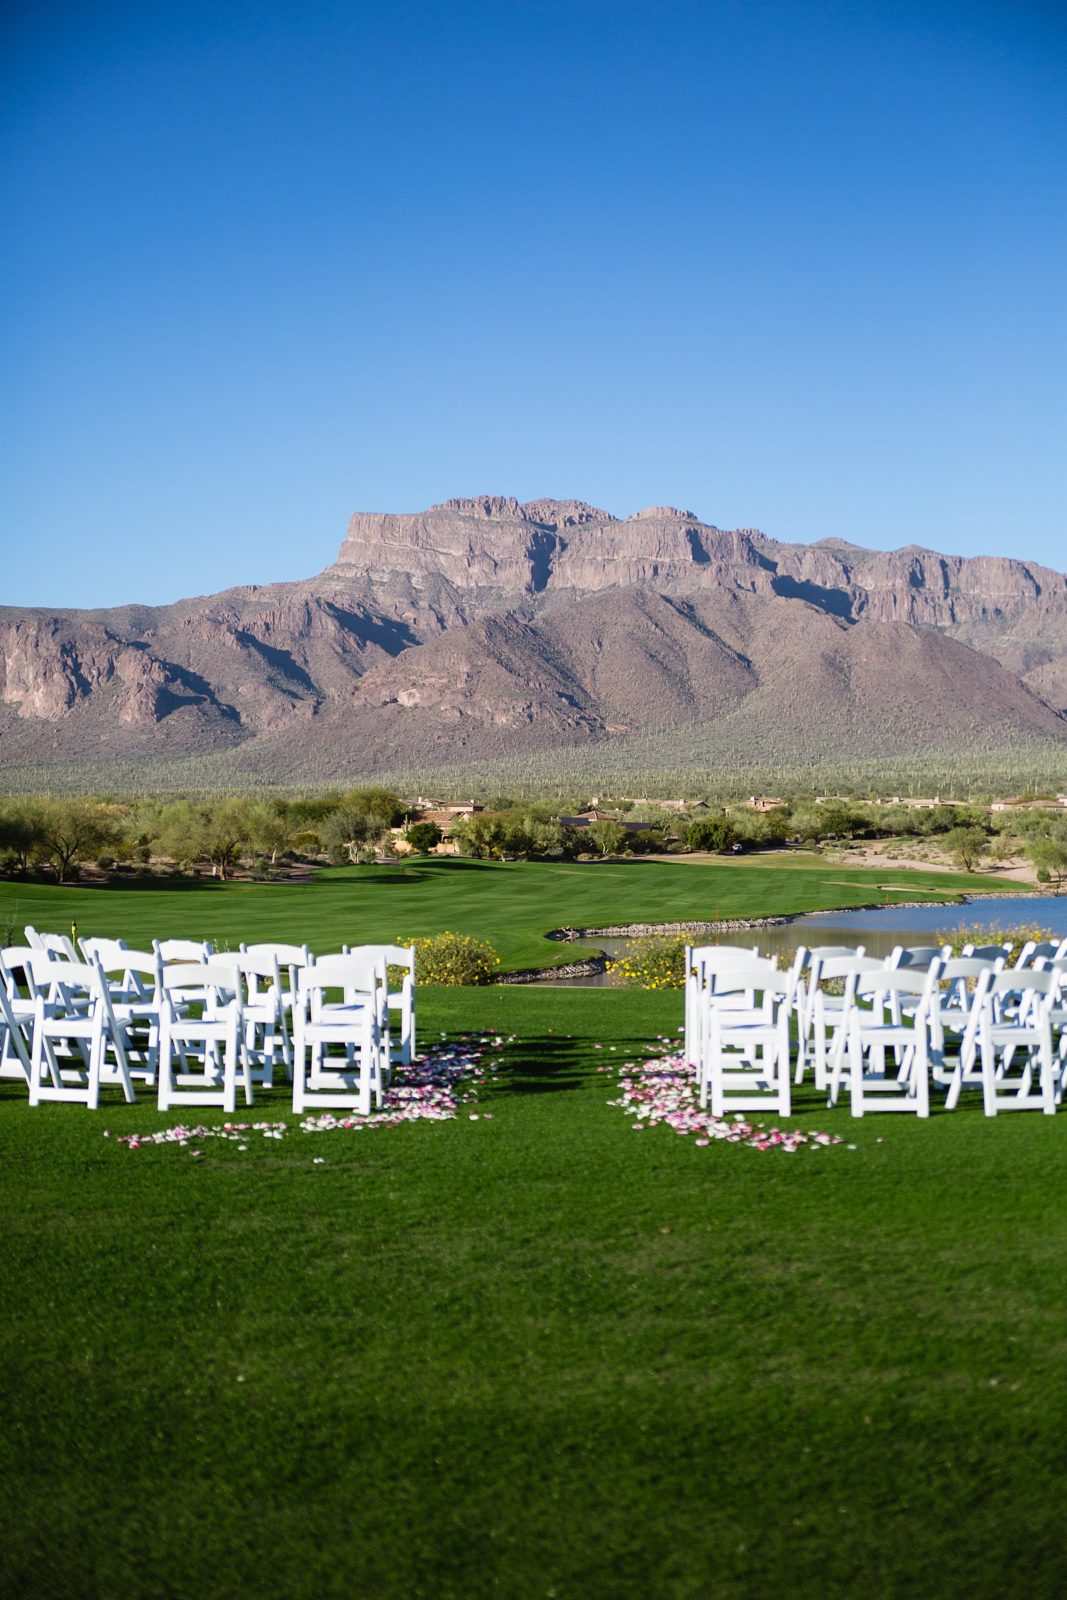 Wedding ceremony at Superstition Mountain Clubhouse by Arizona wedding photographer PMA Photography.